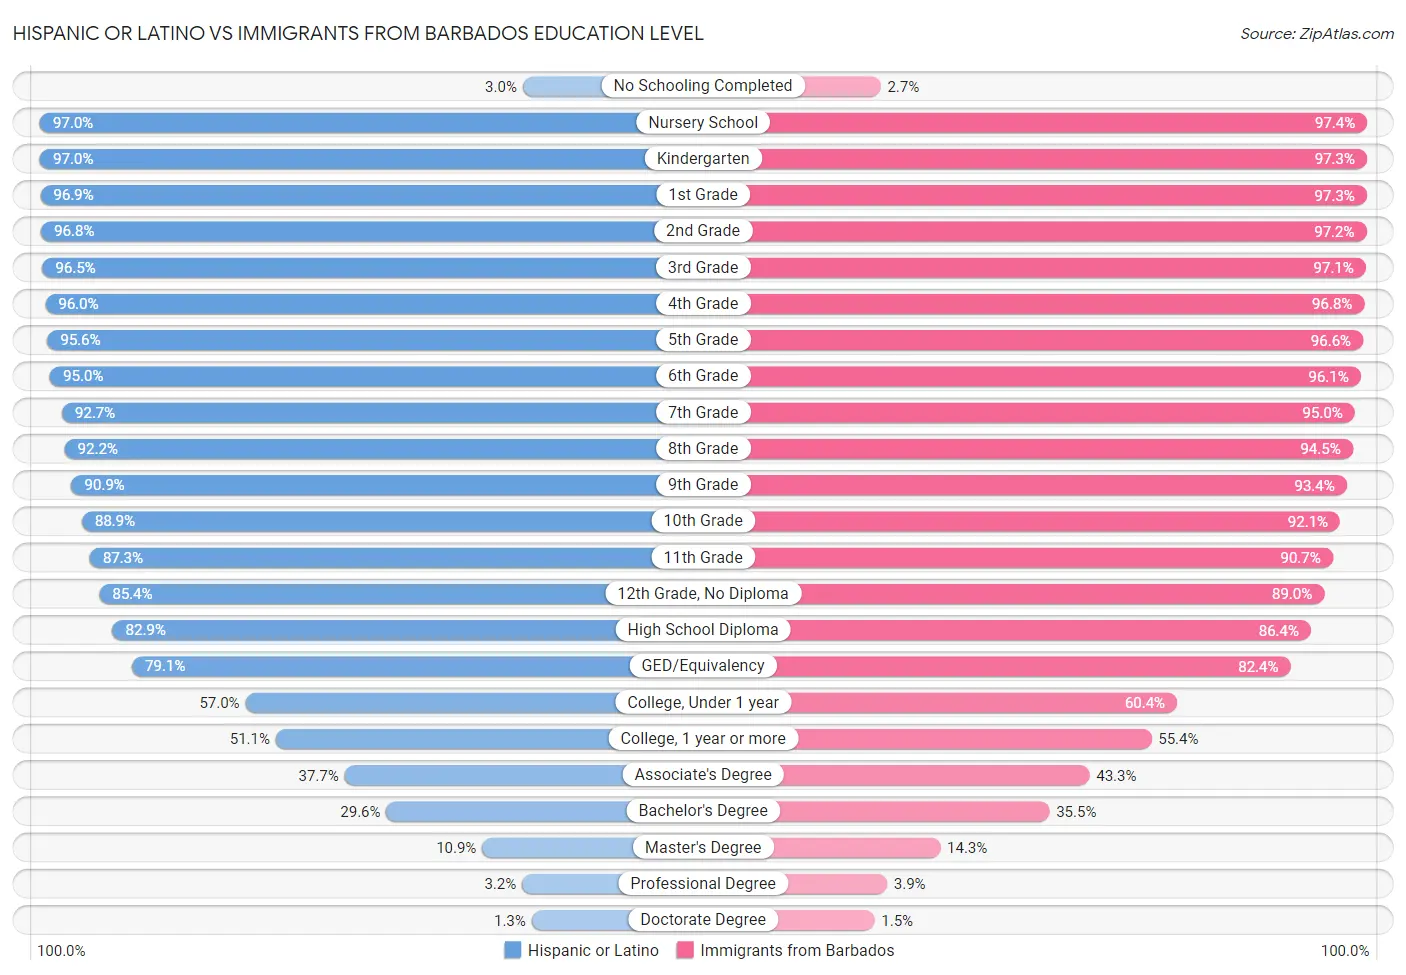 Hispanic or Latino vs Immigrants from Barbados Education Level